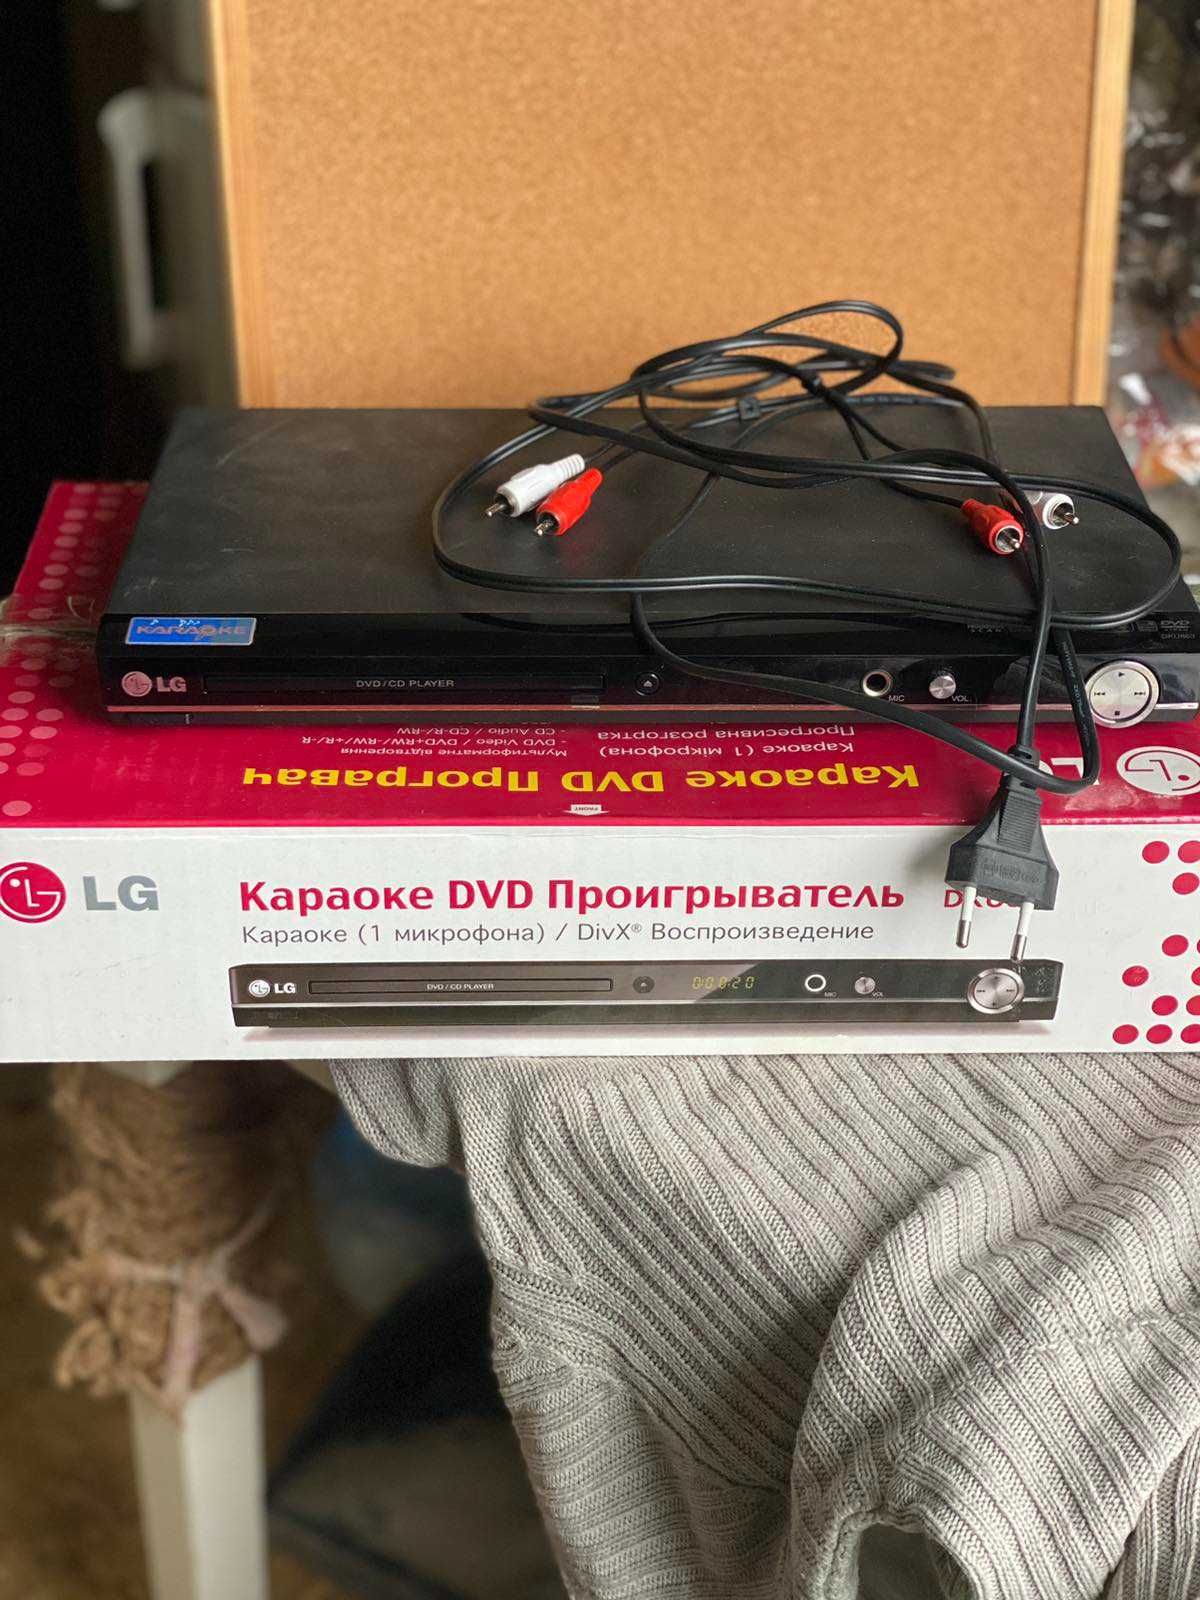 DVD-плеер LG DKU-863 + караоке